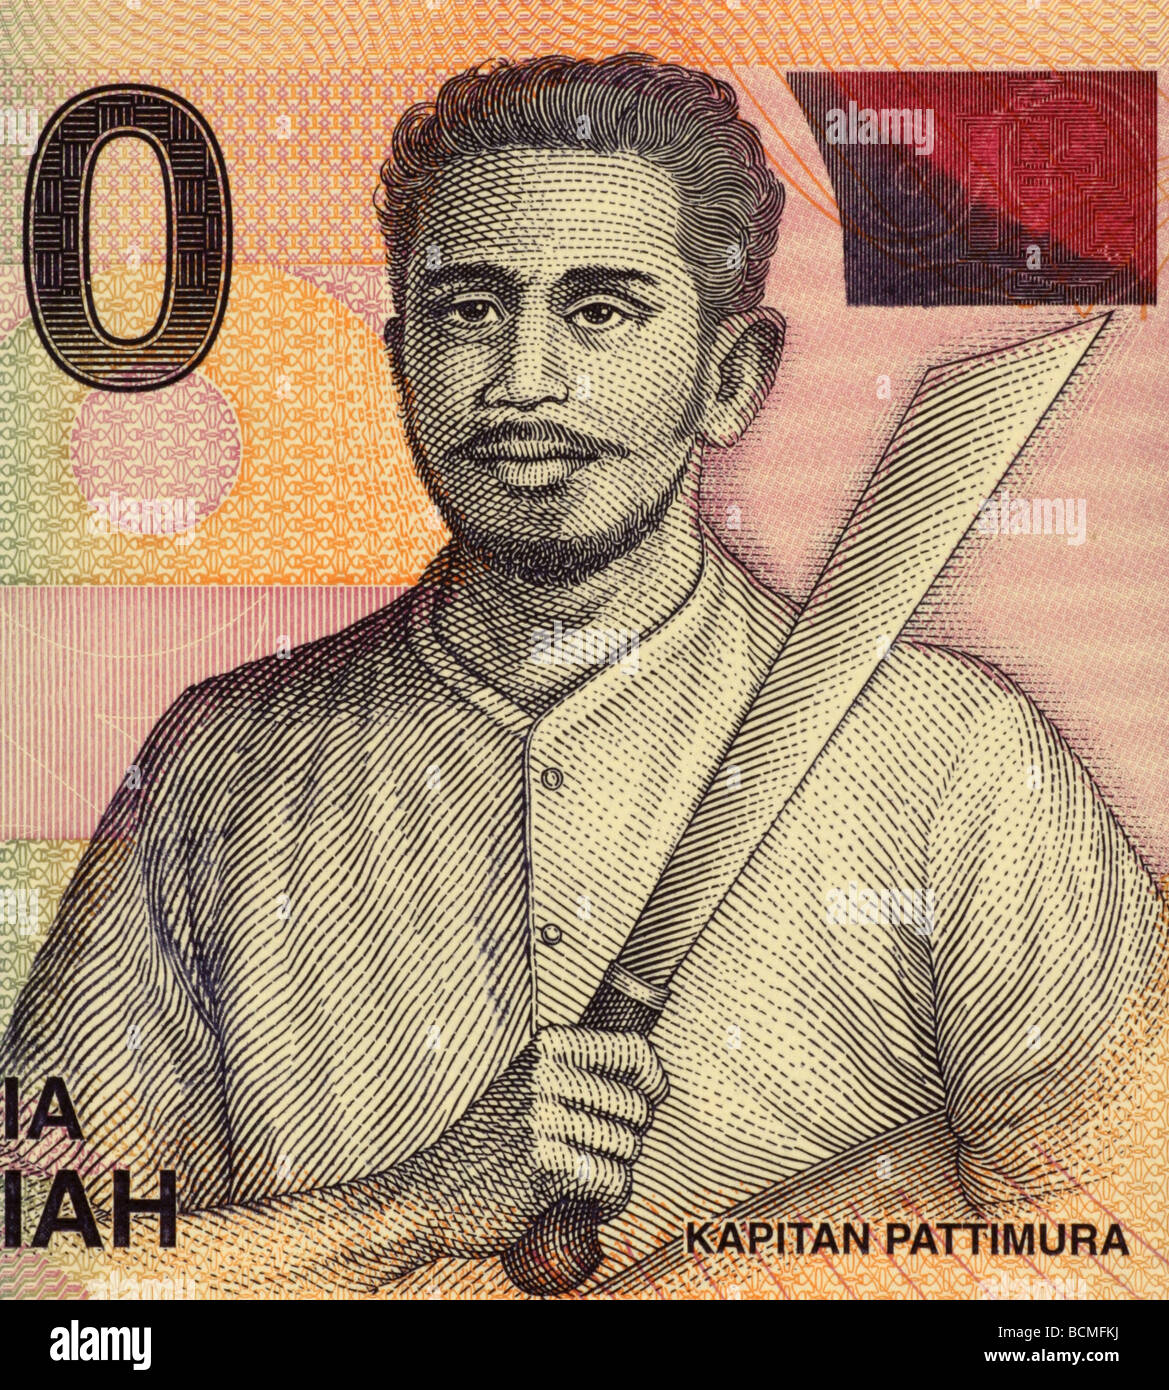 Kapitan Pattimura on 1000 Rupiah 2000 Banknote from Indonesia Stock Photo